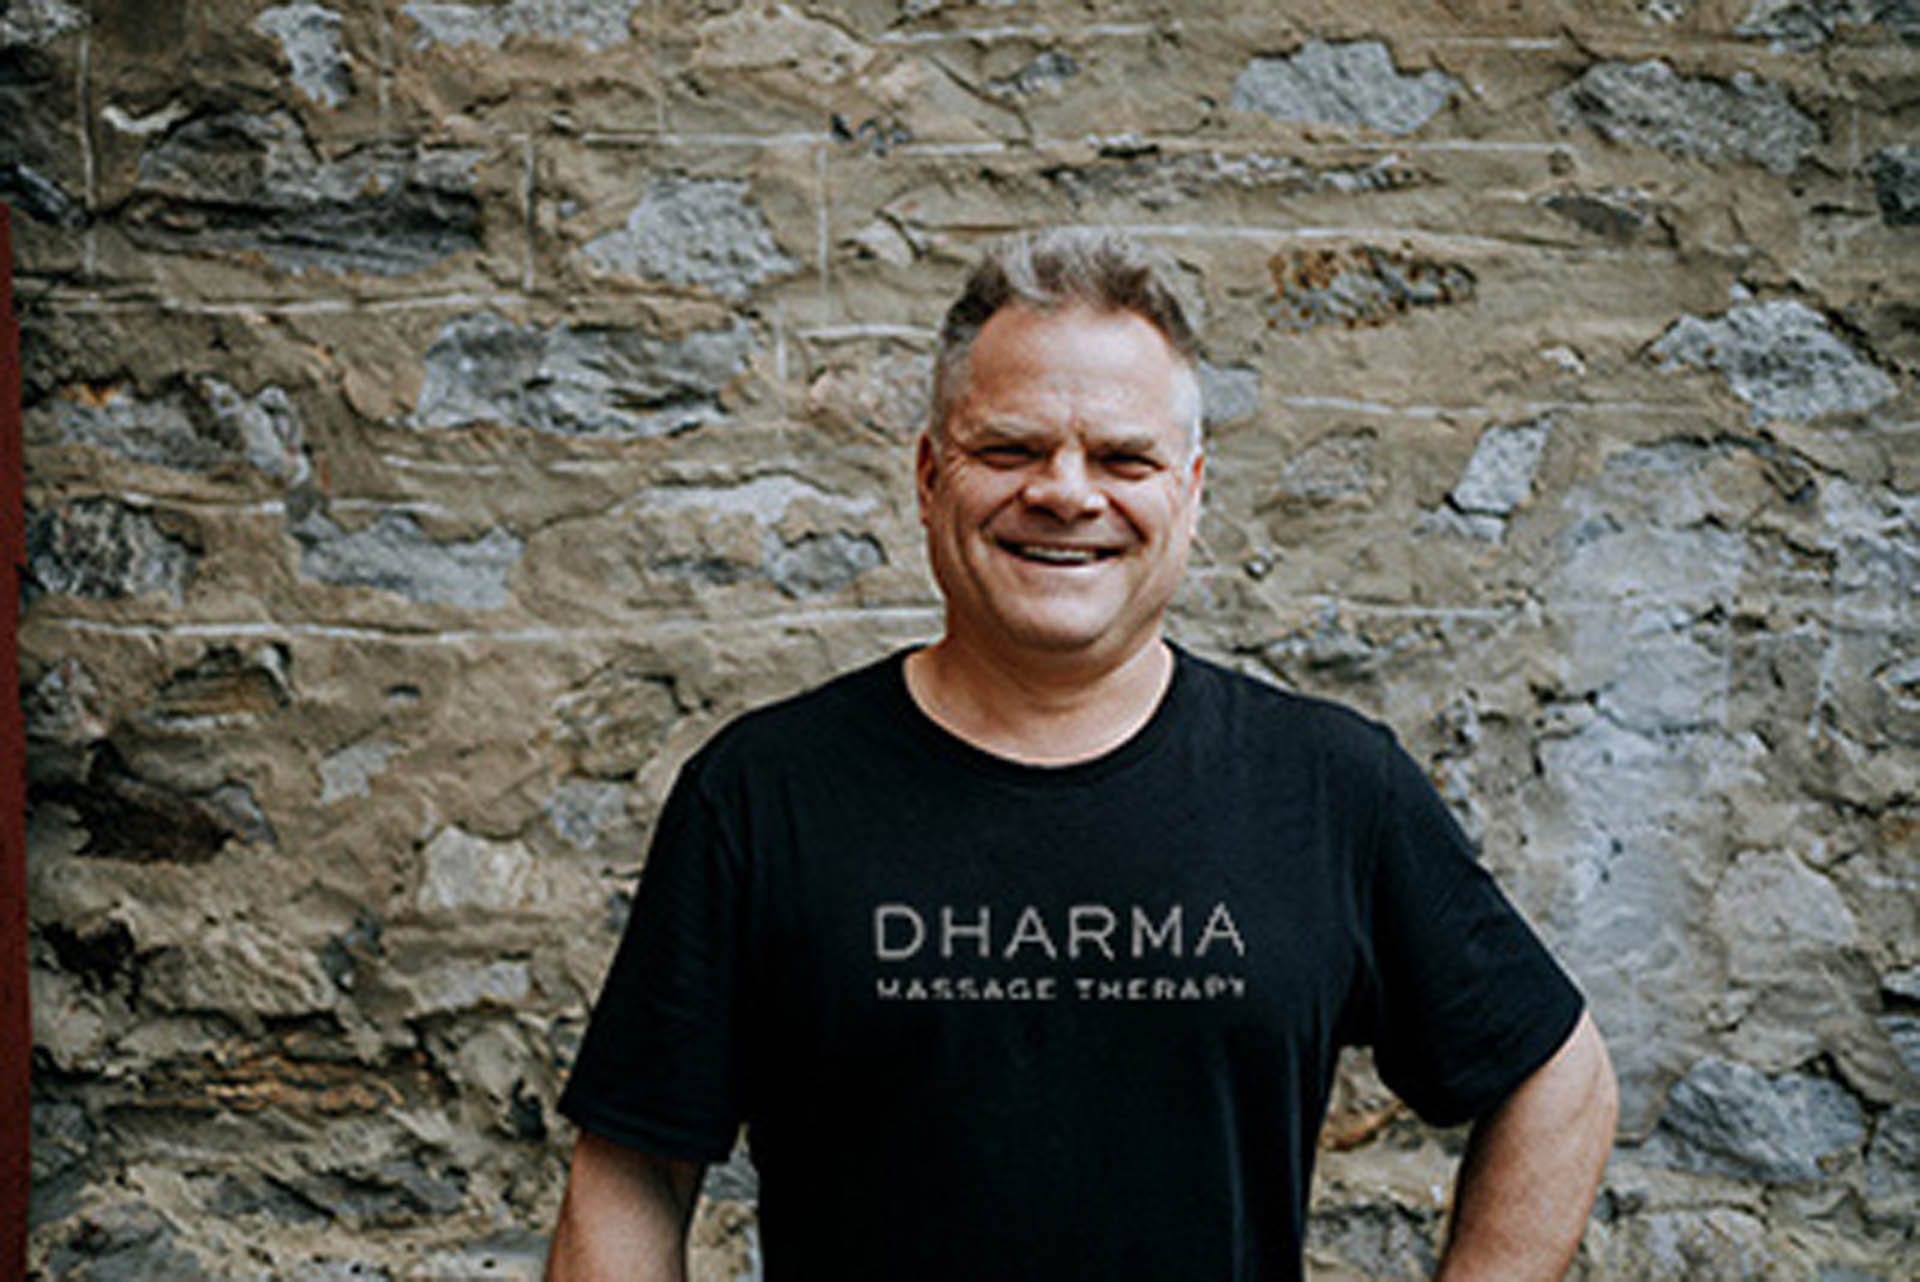 Massage therapist Mark standing in Dharma Massage shirt